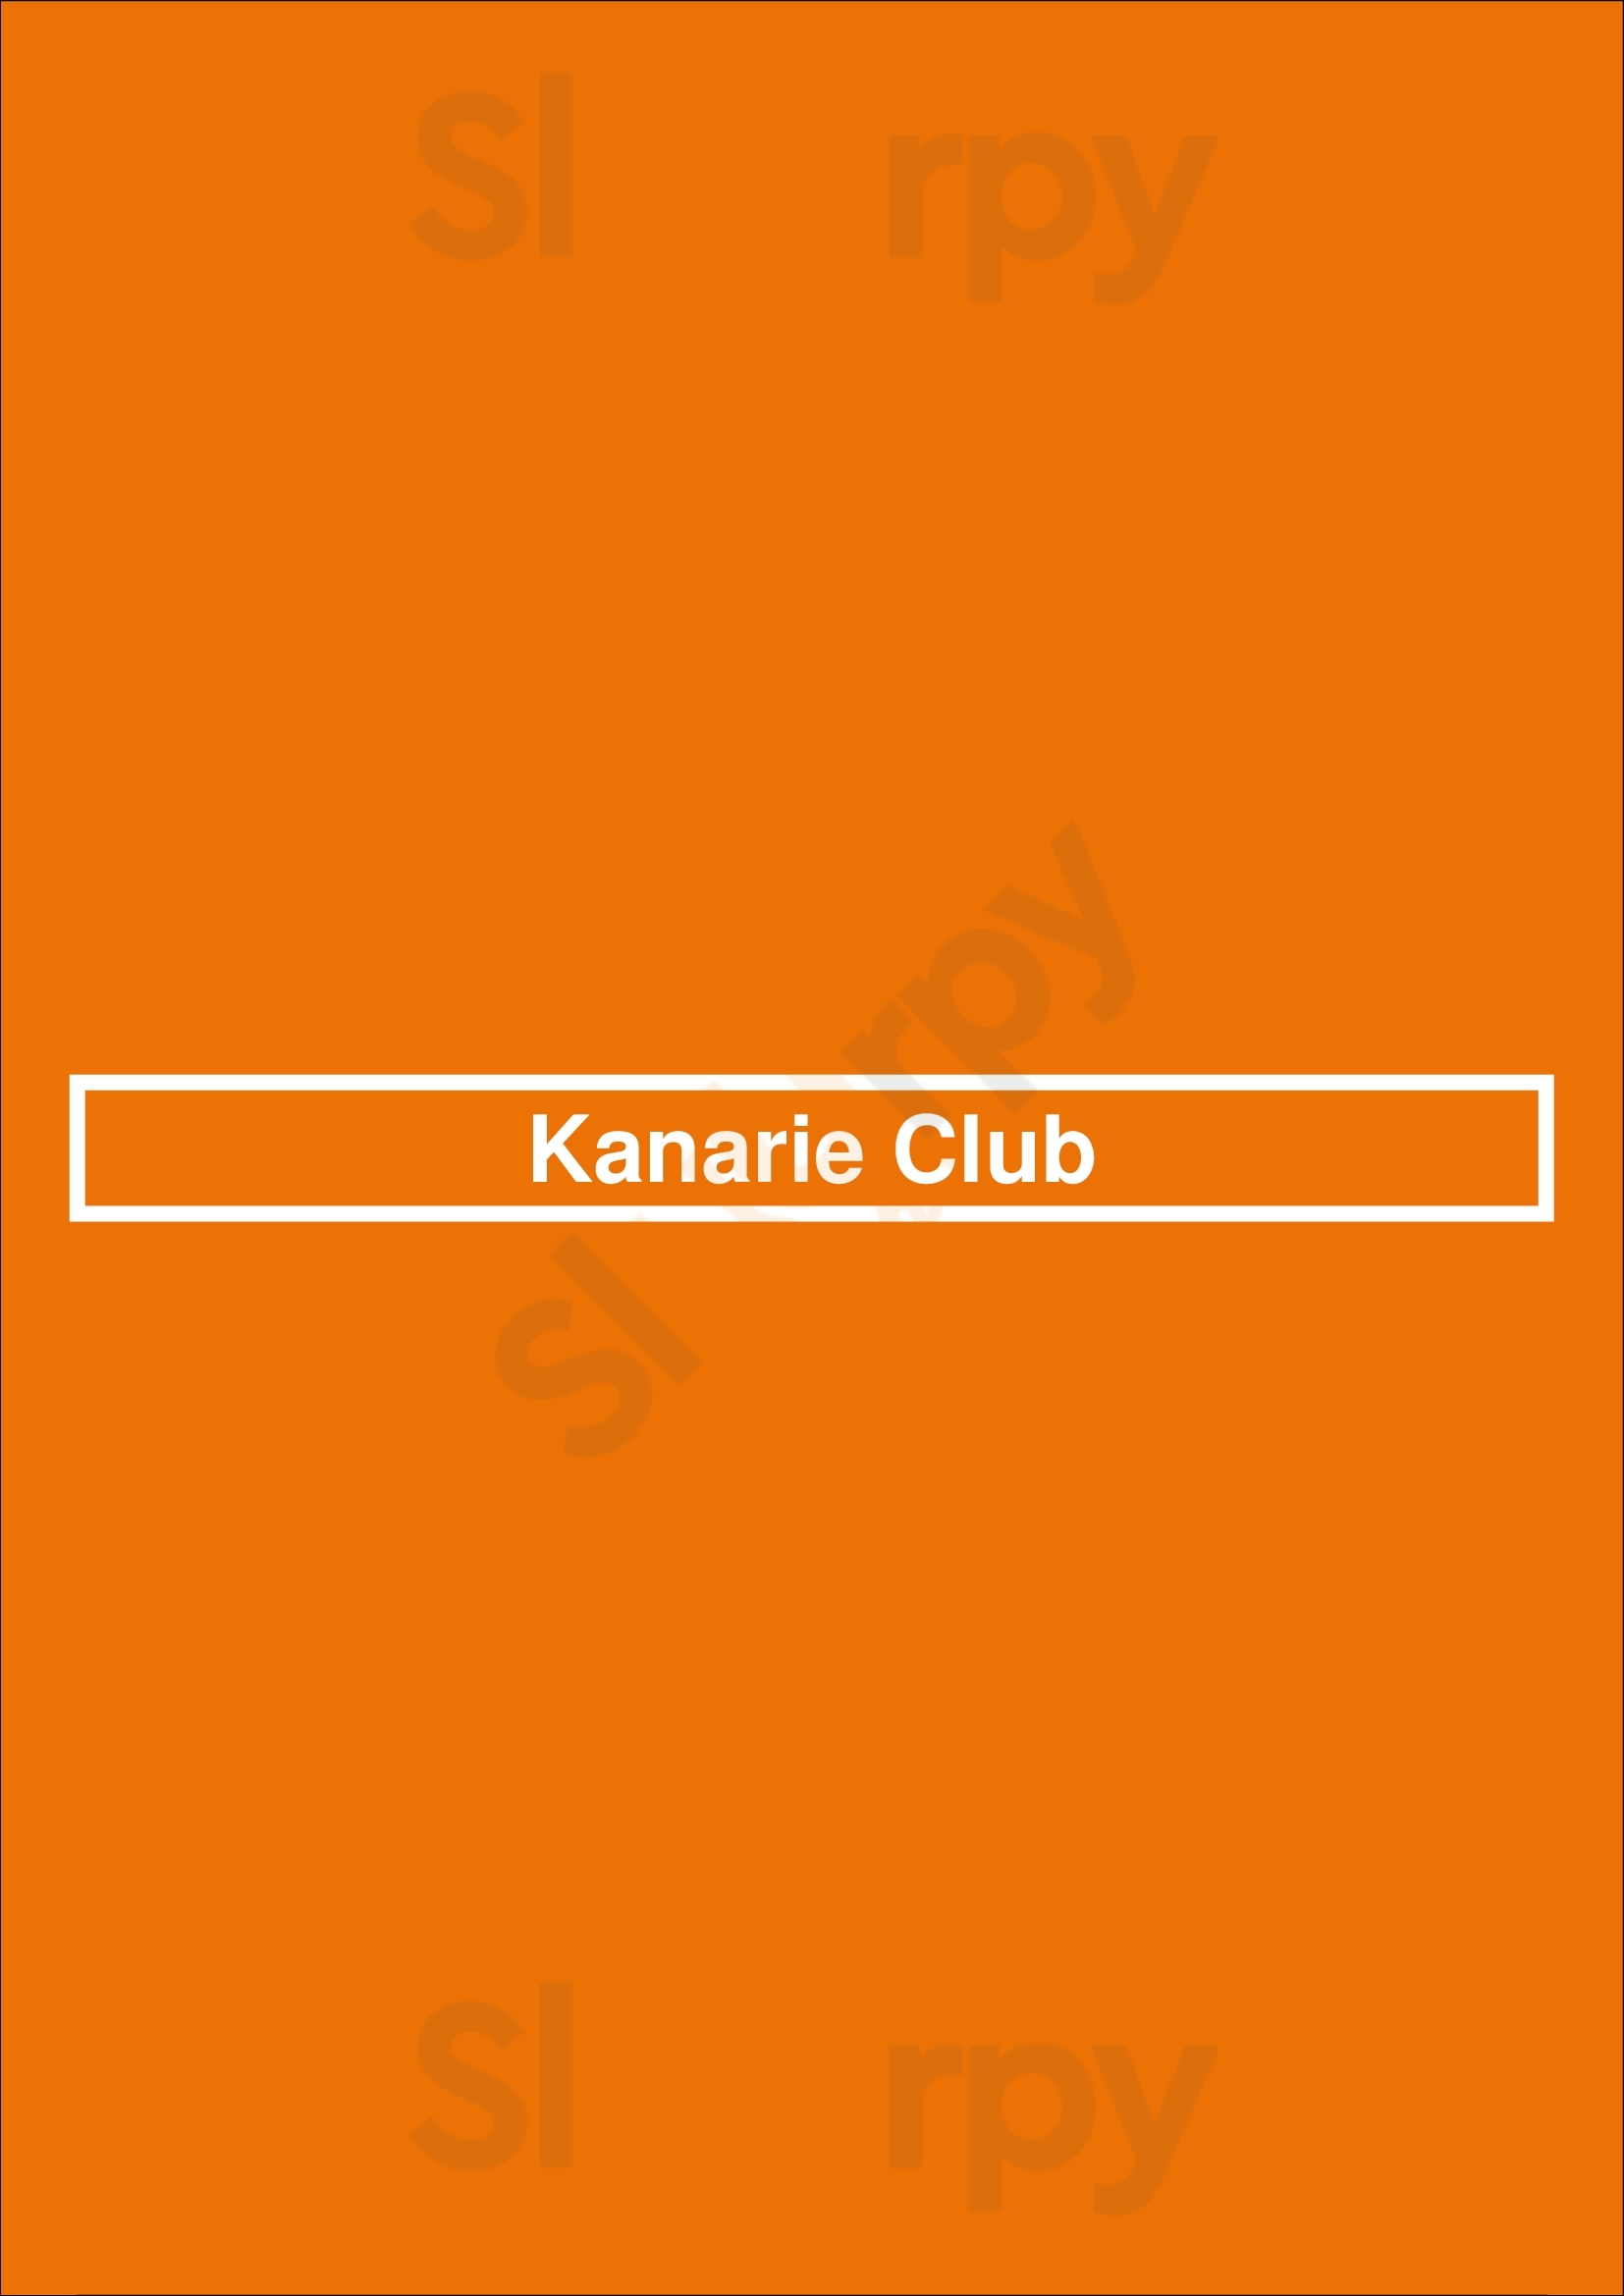 Kanarie Club Amsterdam Menu - 1